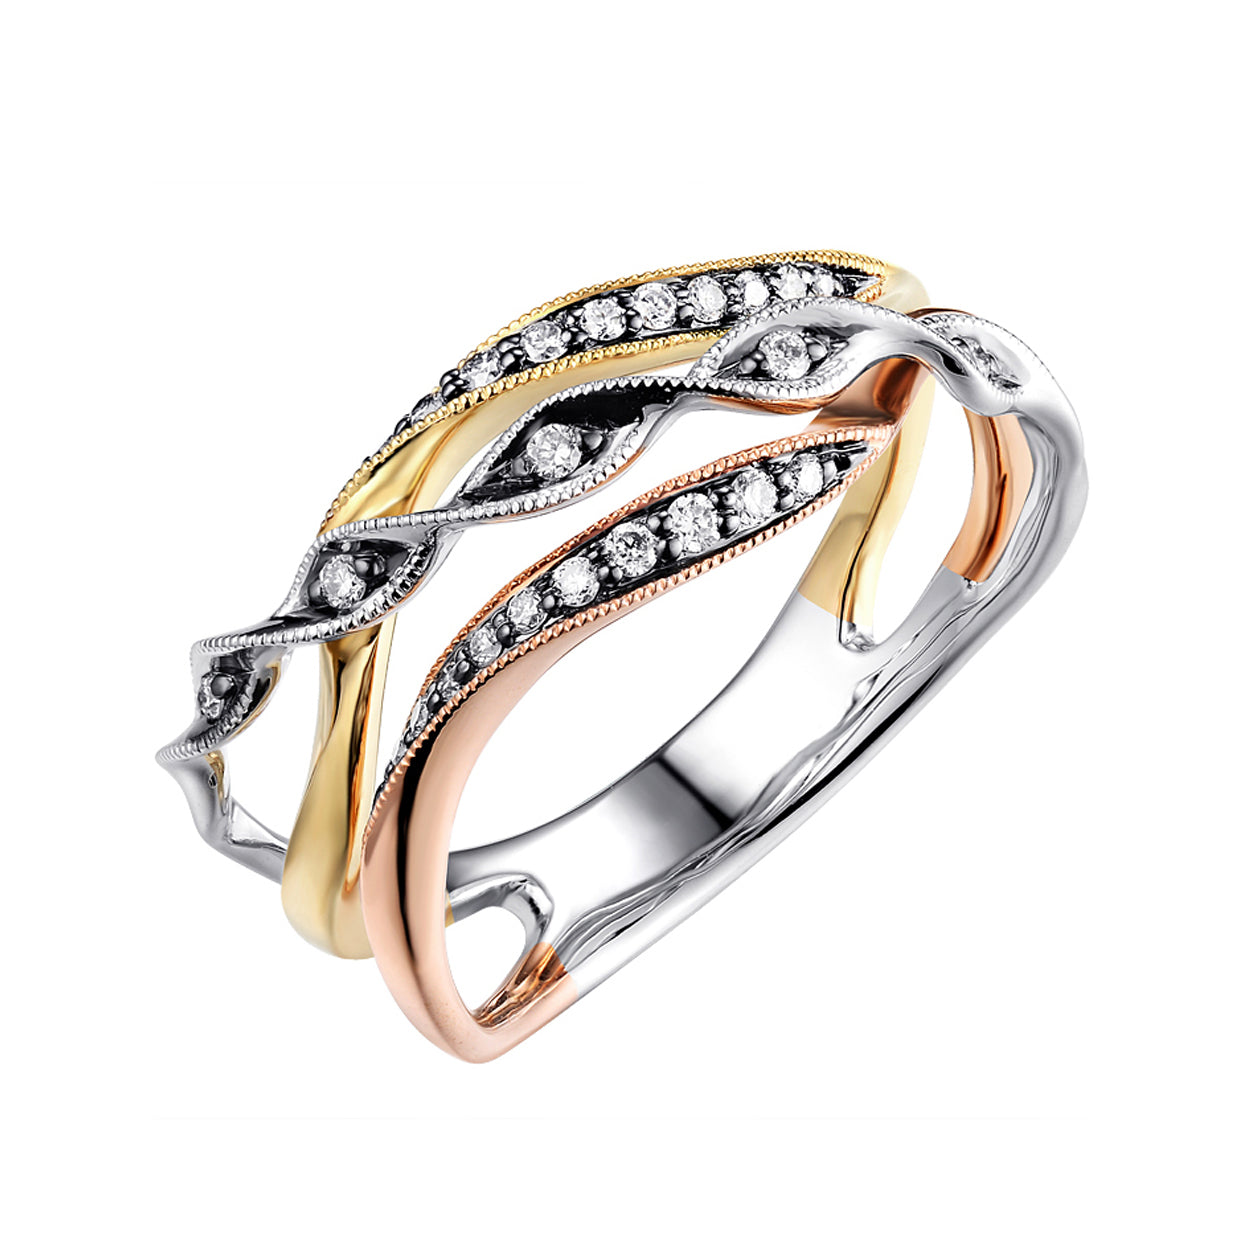 18K White Gold Fashion Duchess Right Hand Ring - LP2243-W - Simon G.